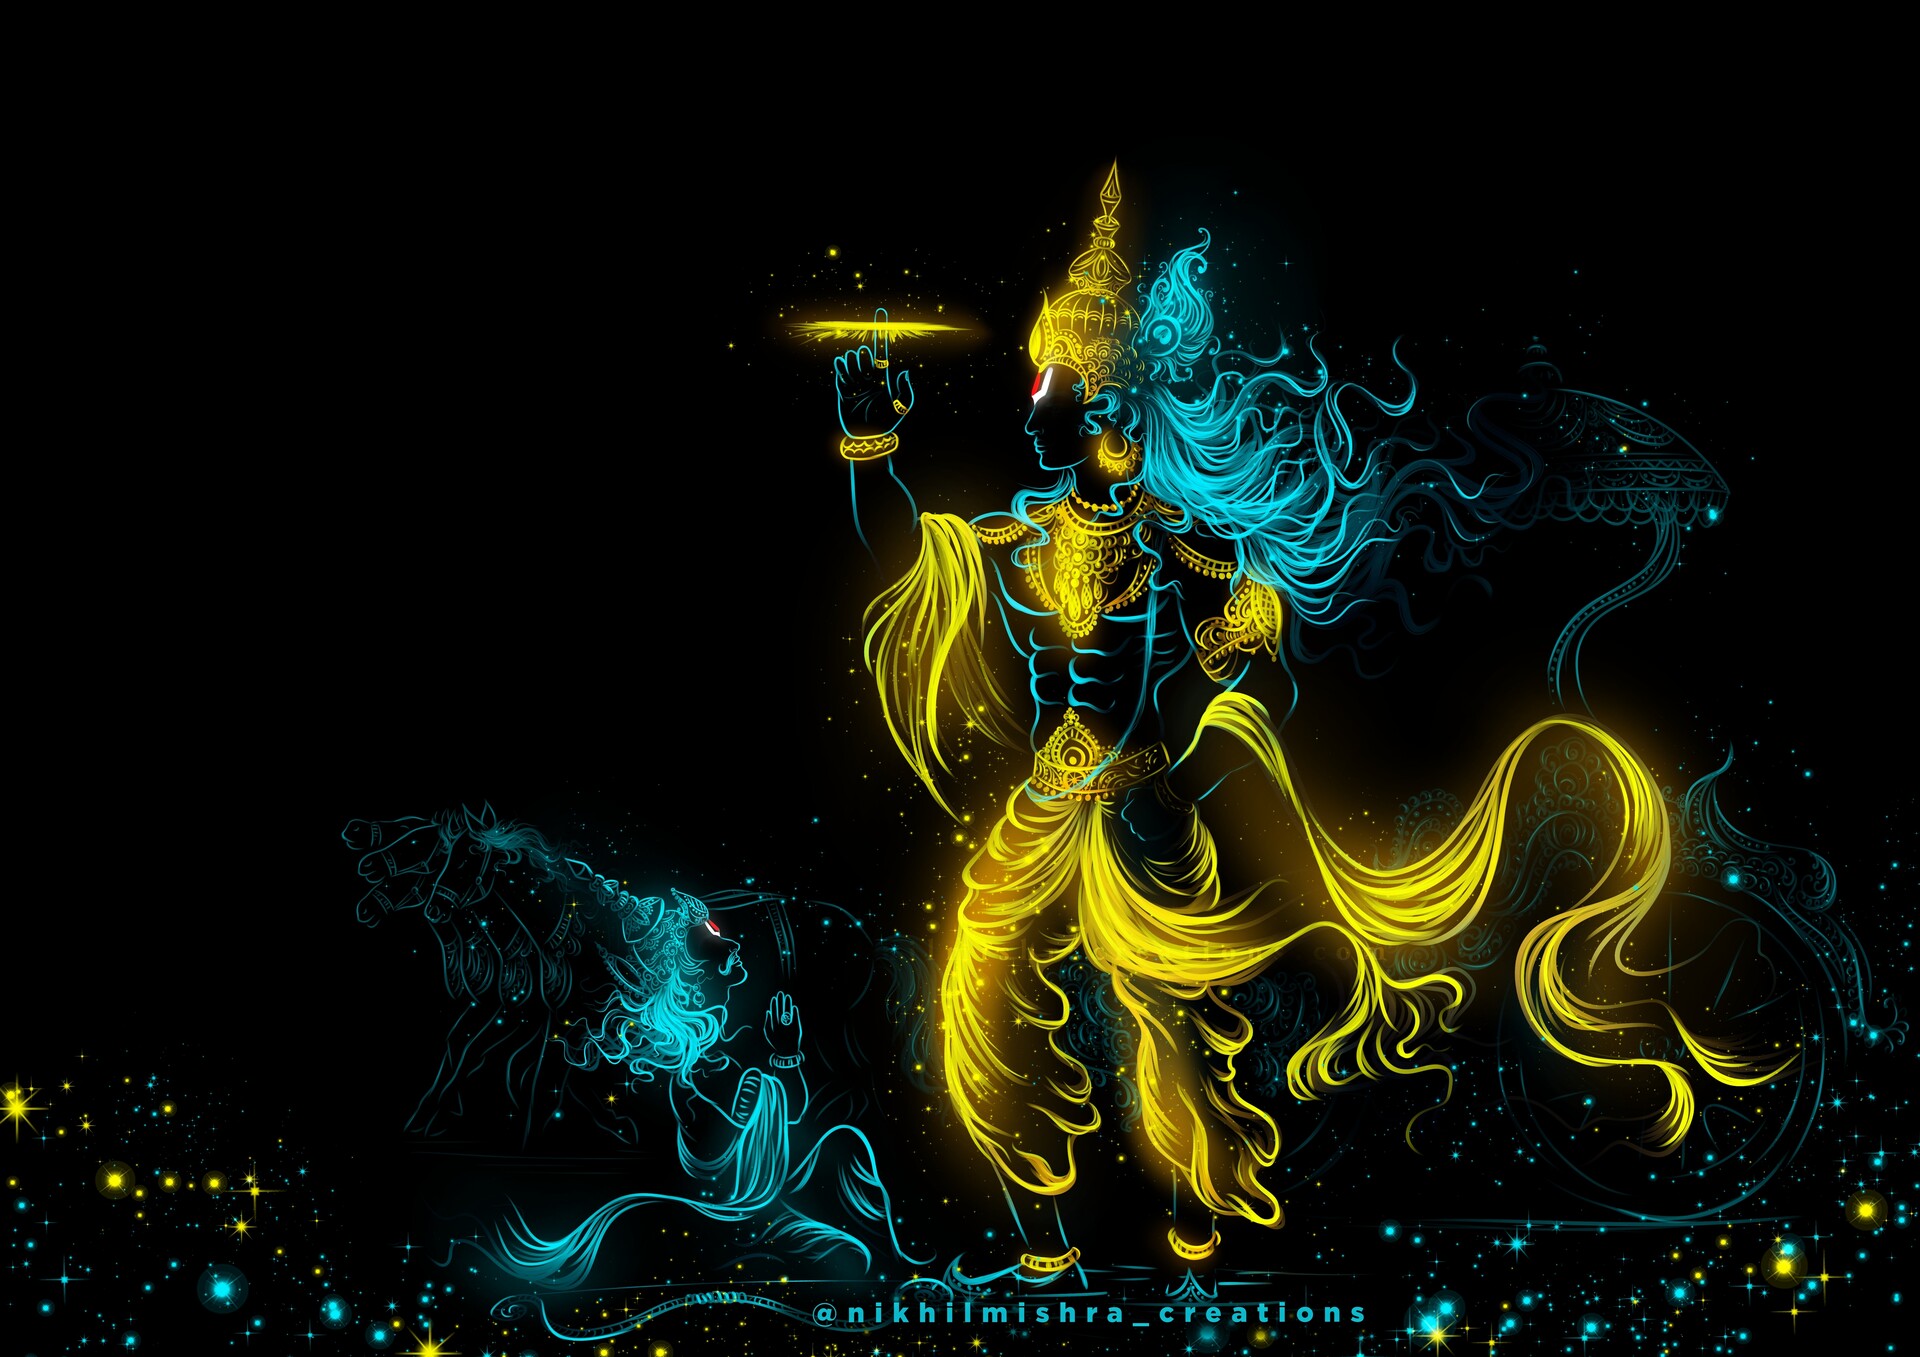 ArtStation - Shri Krishna Geeta updesh Digital artwork